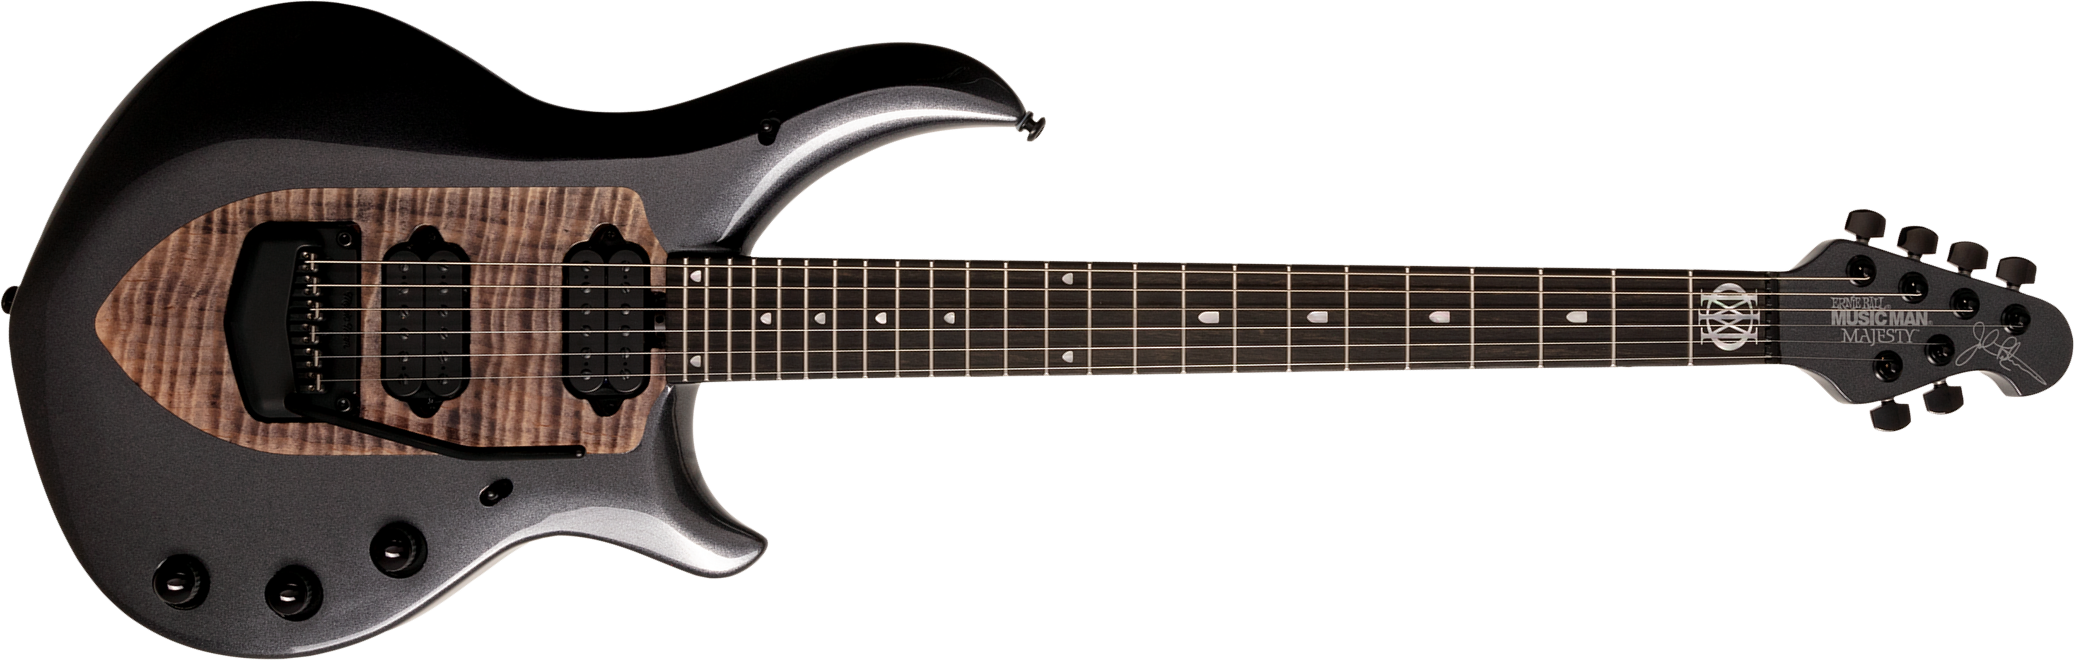 Music Man John Petrucci Majesty 6 Signature 2h Dimarzio Piezo Trem - Smoked Pearl - Metalen elektrische gitaar - Main picture